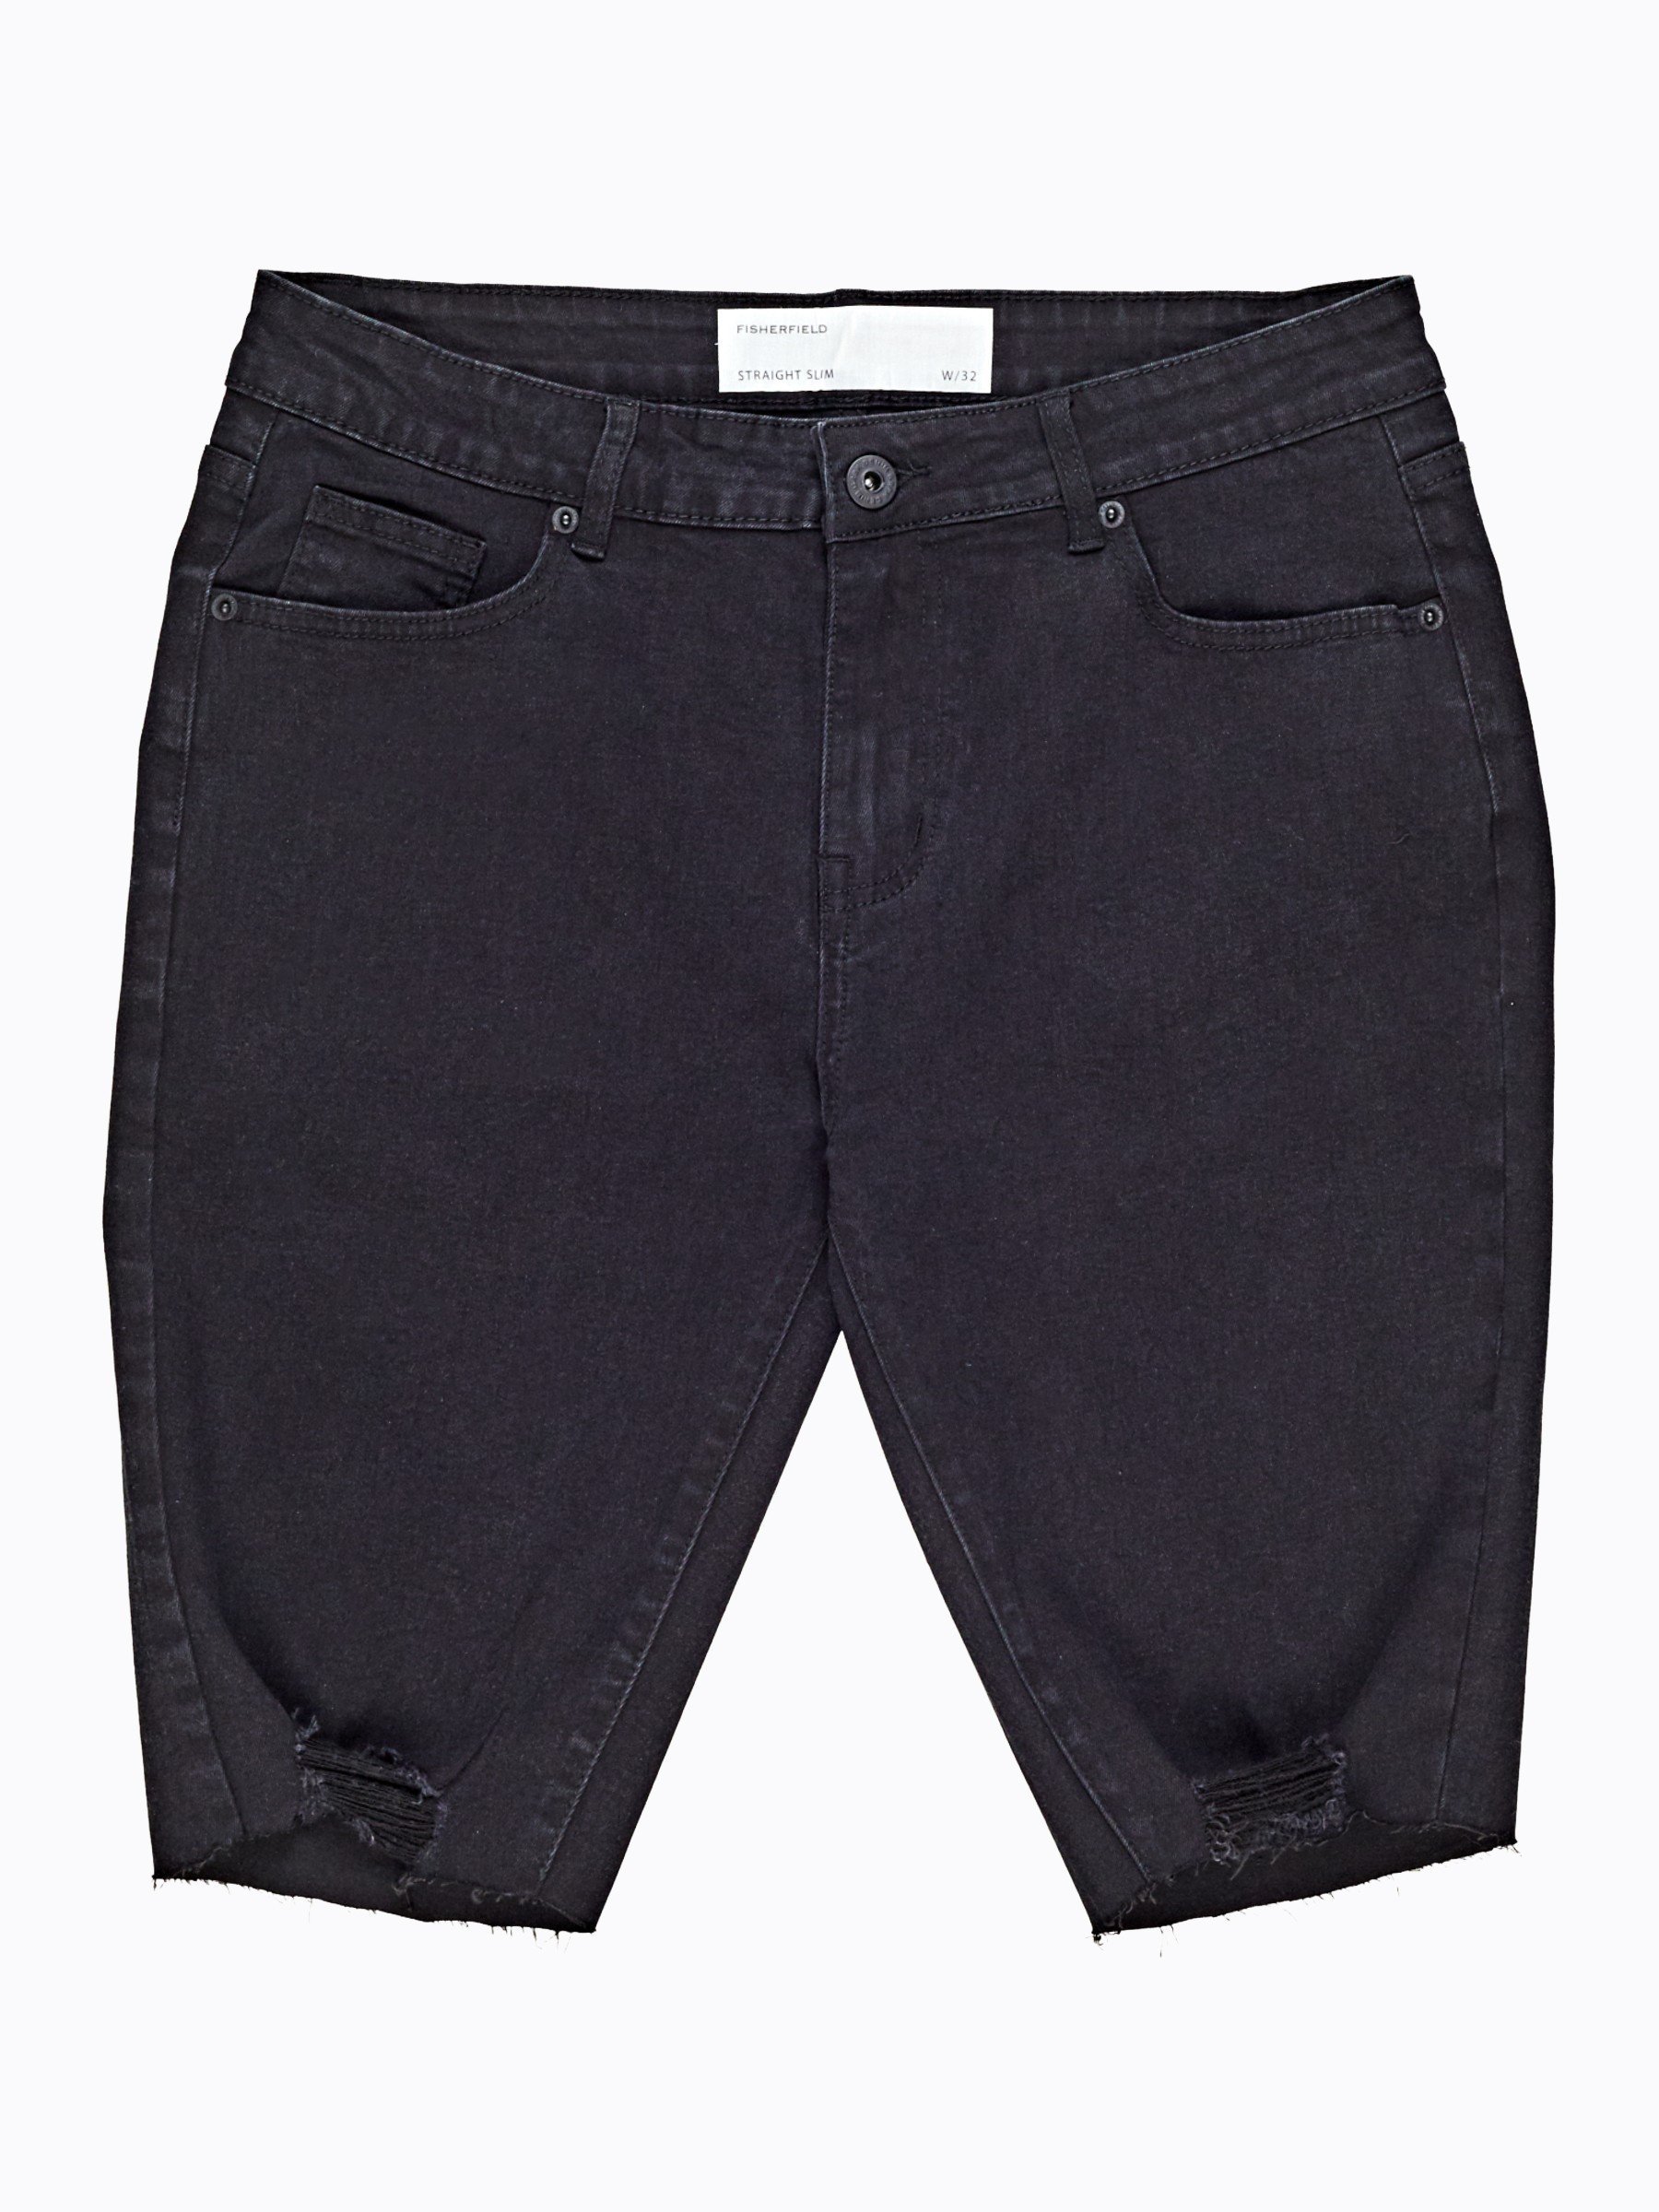 Jeans Shorts Slim Fit mit Fransensaum | GATE